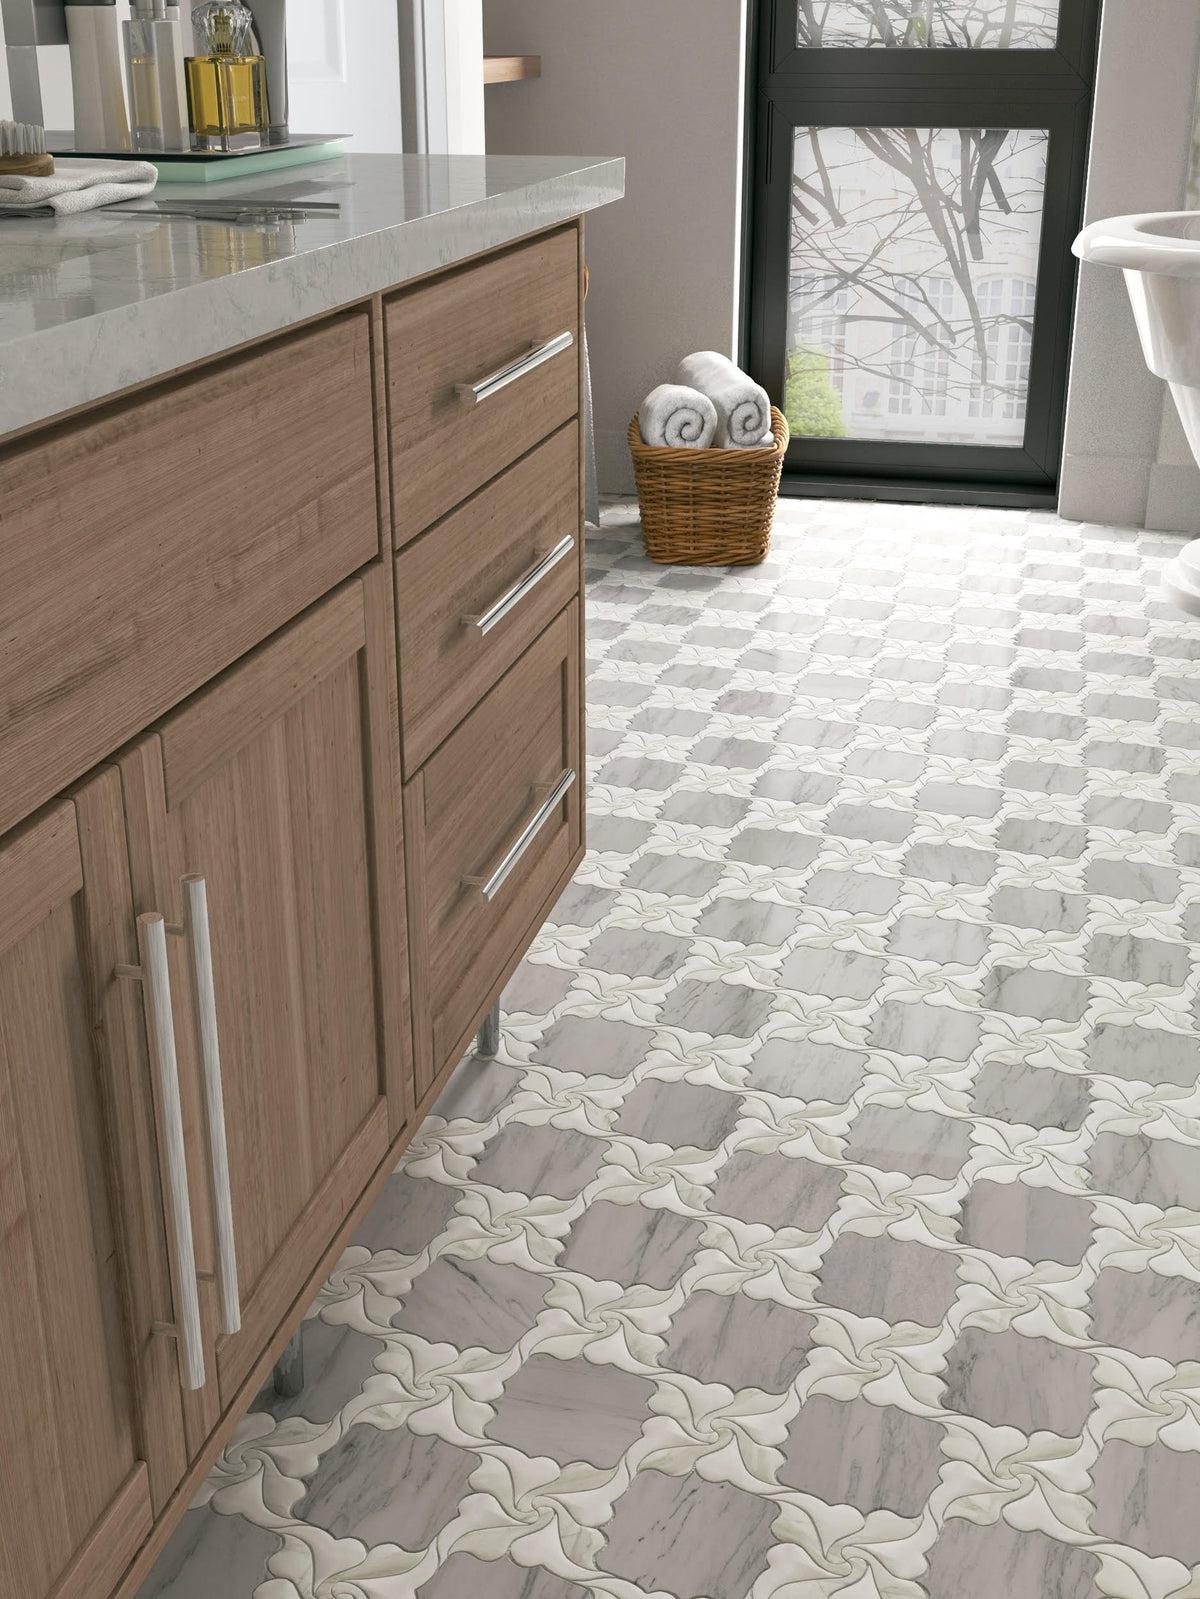 Beautiful Bathroom Floor Design with a Subtle Flower Pattern in Lily Calacatta Gold & Carrara Mosaic Tile